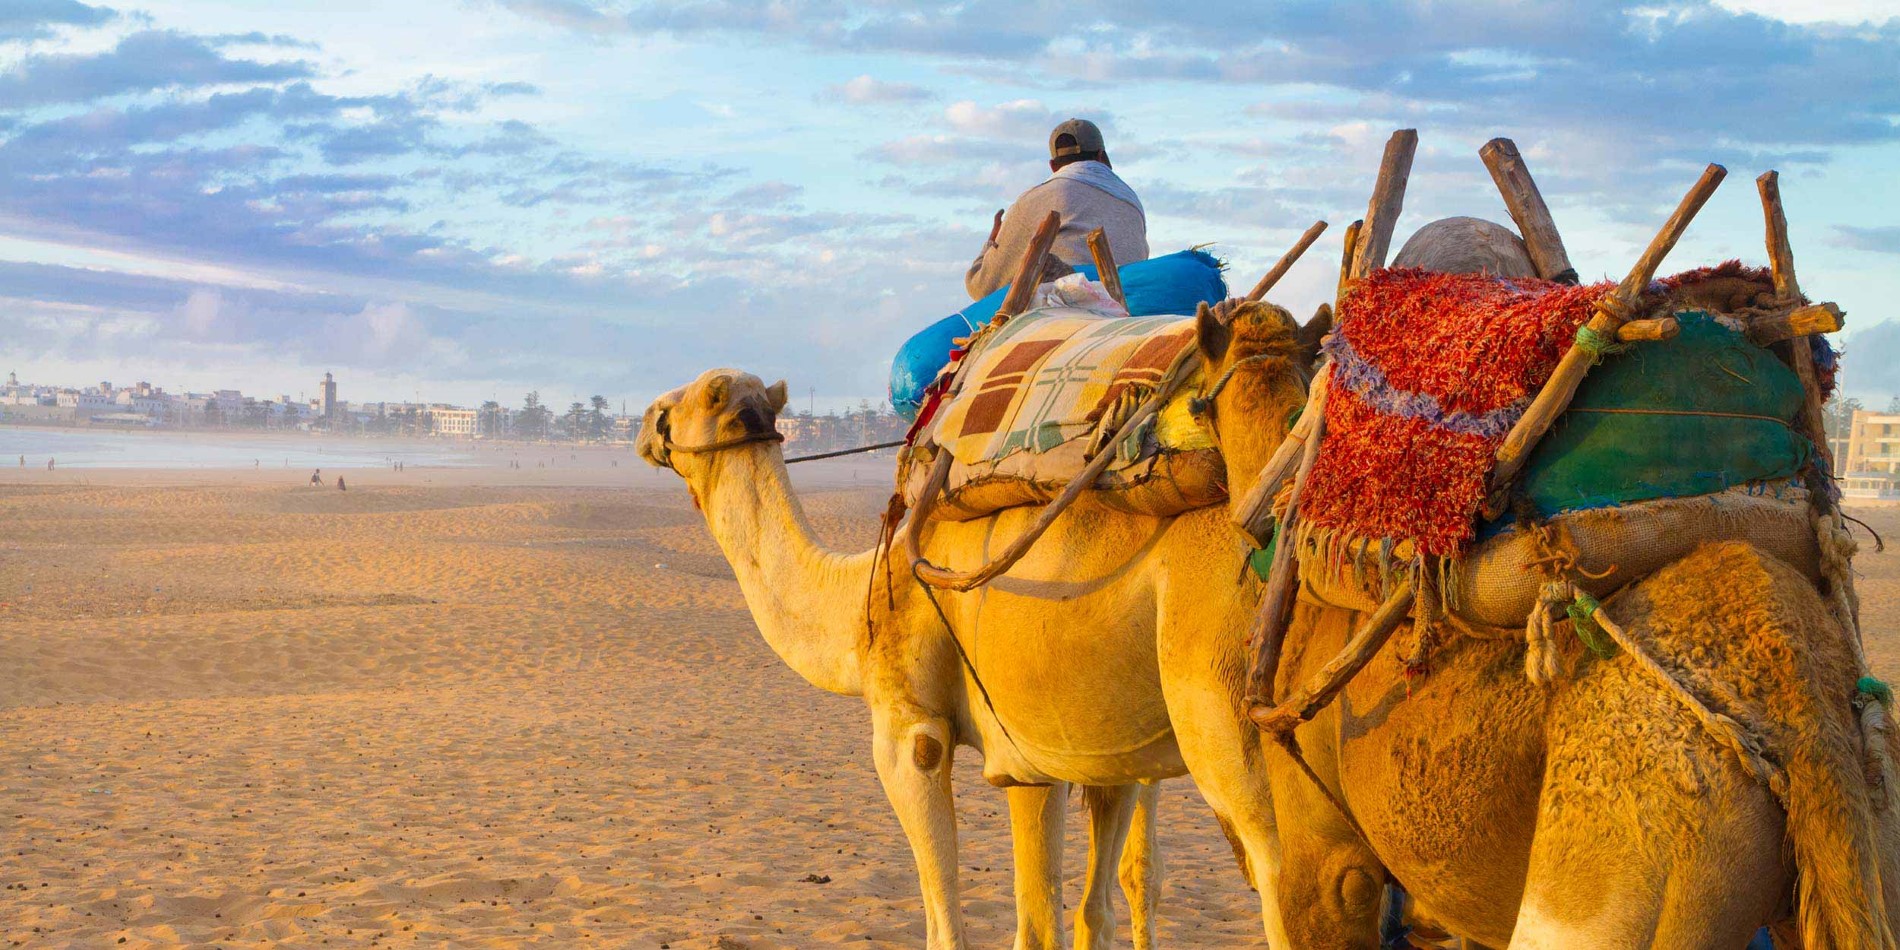 Camel caravan at the beach in Morocco